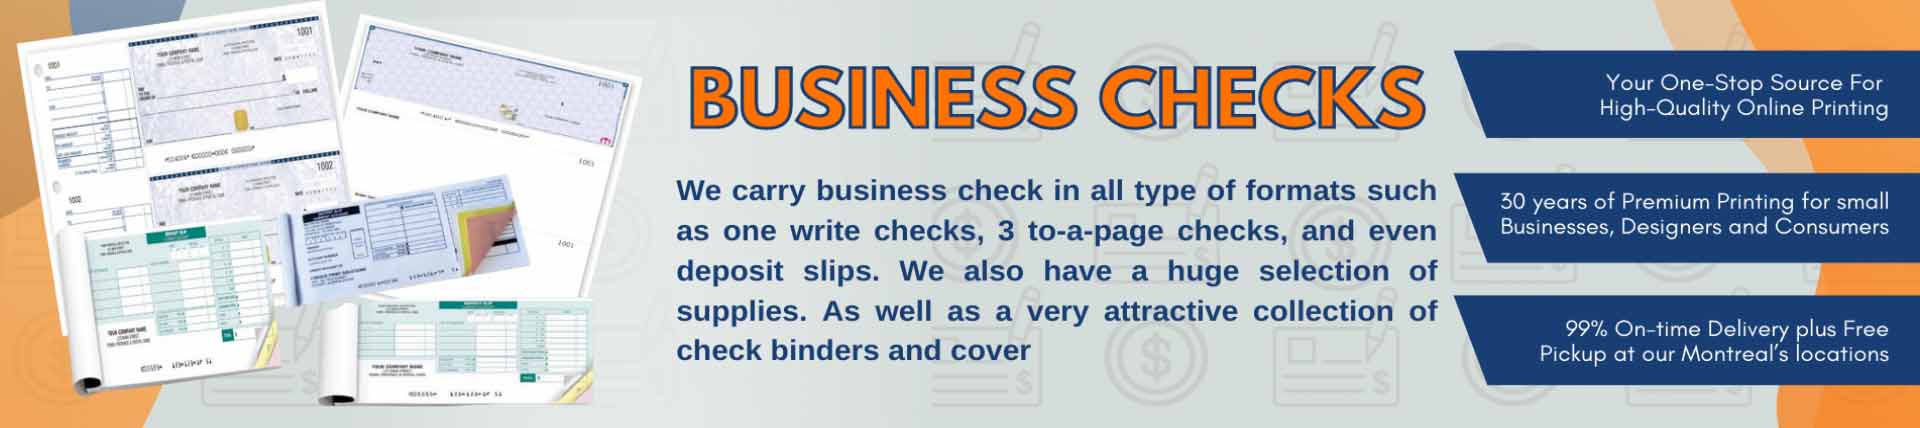 Business_Checks1.jpg